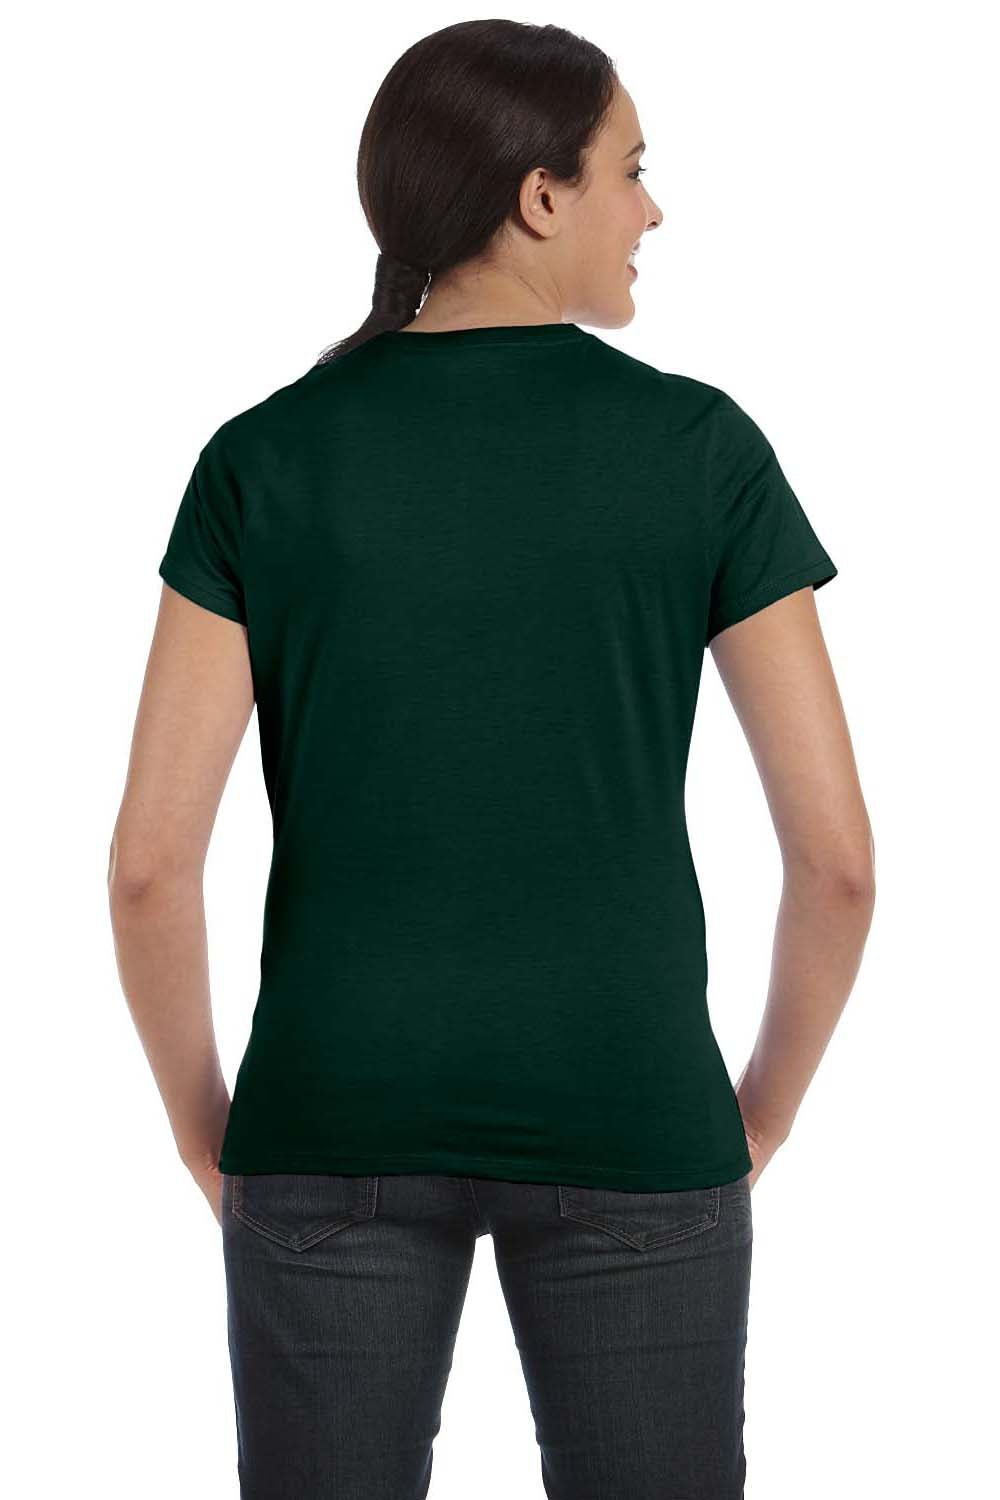 Hanes SL04 Womens Nano-T Short Sleeve Crewneck T-Shirt Forest Green Back